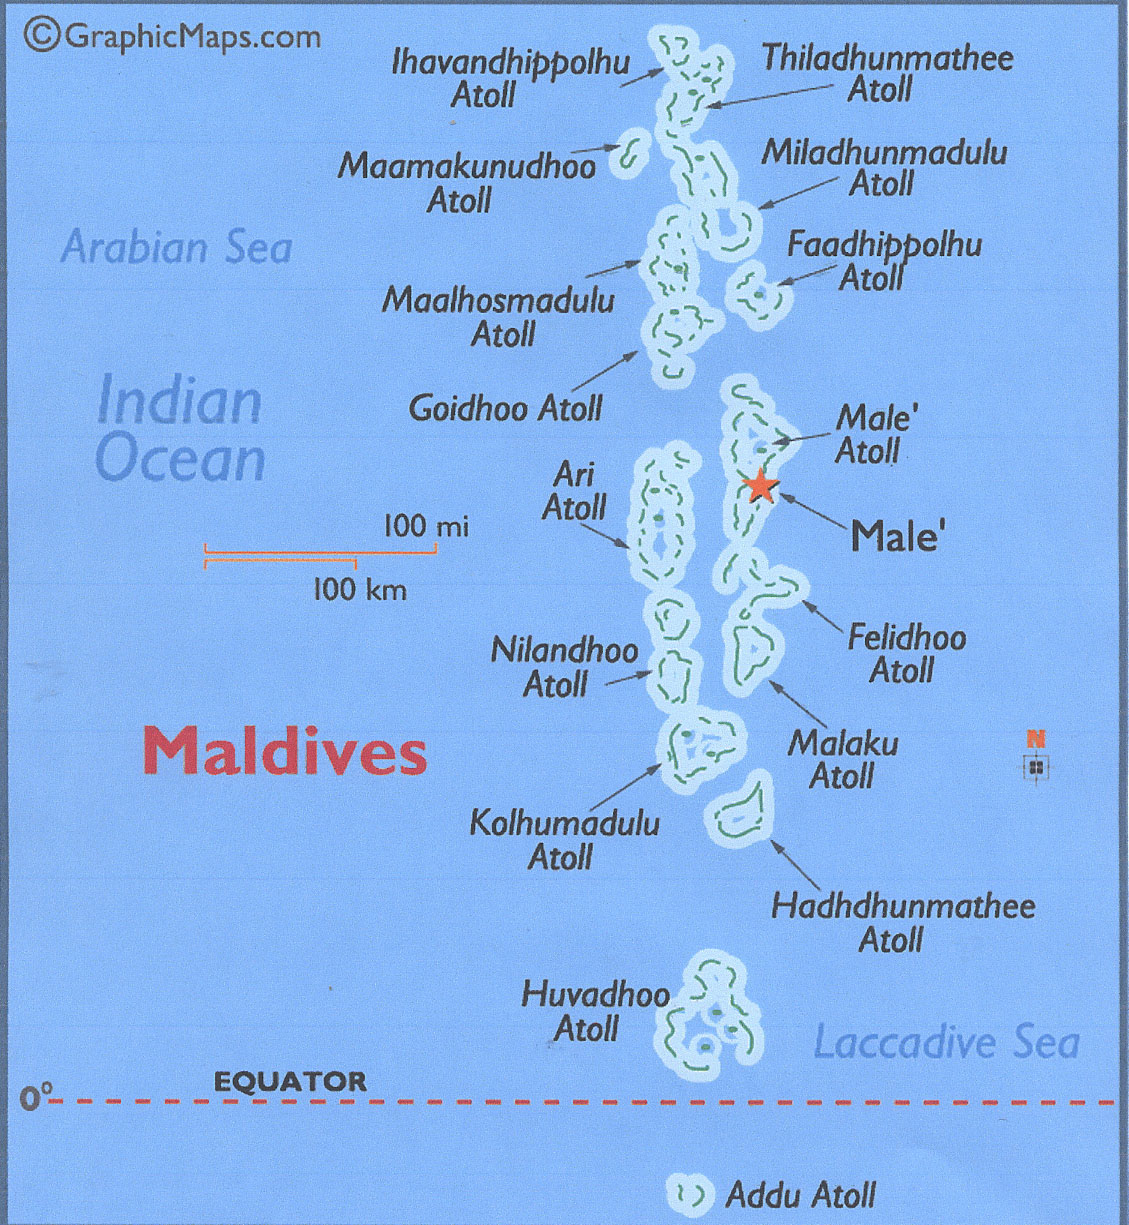 Maldives Archipelago in Indian Ocean